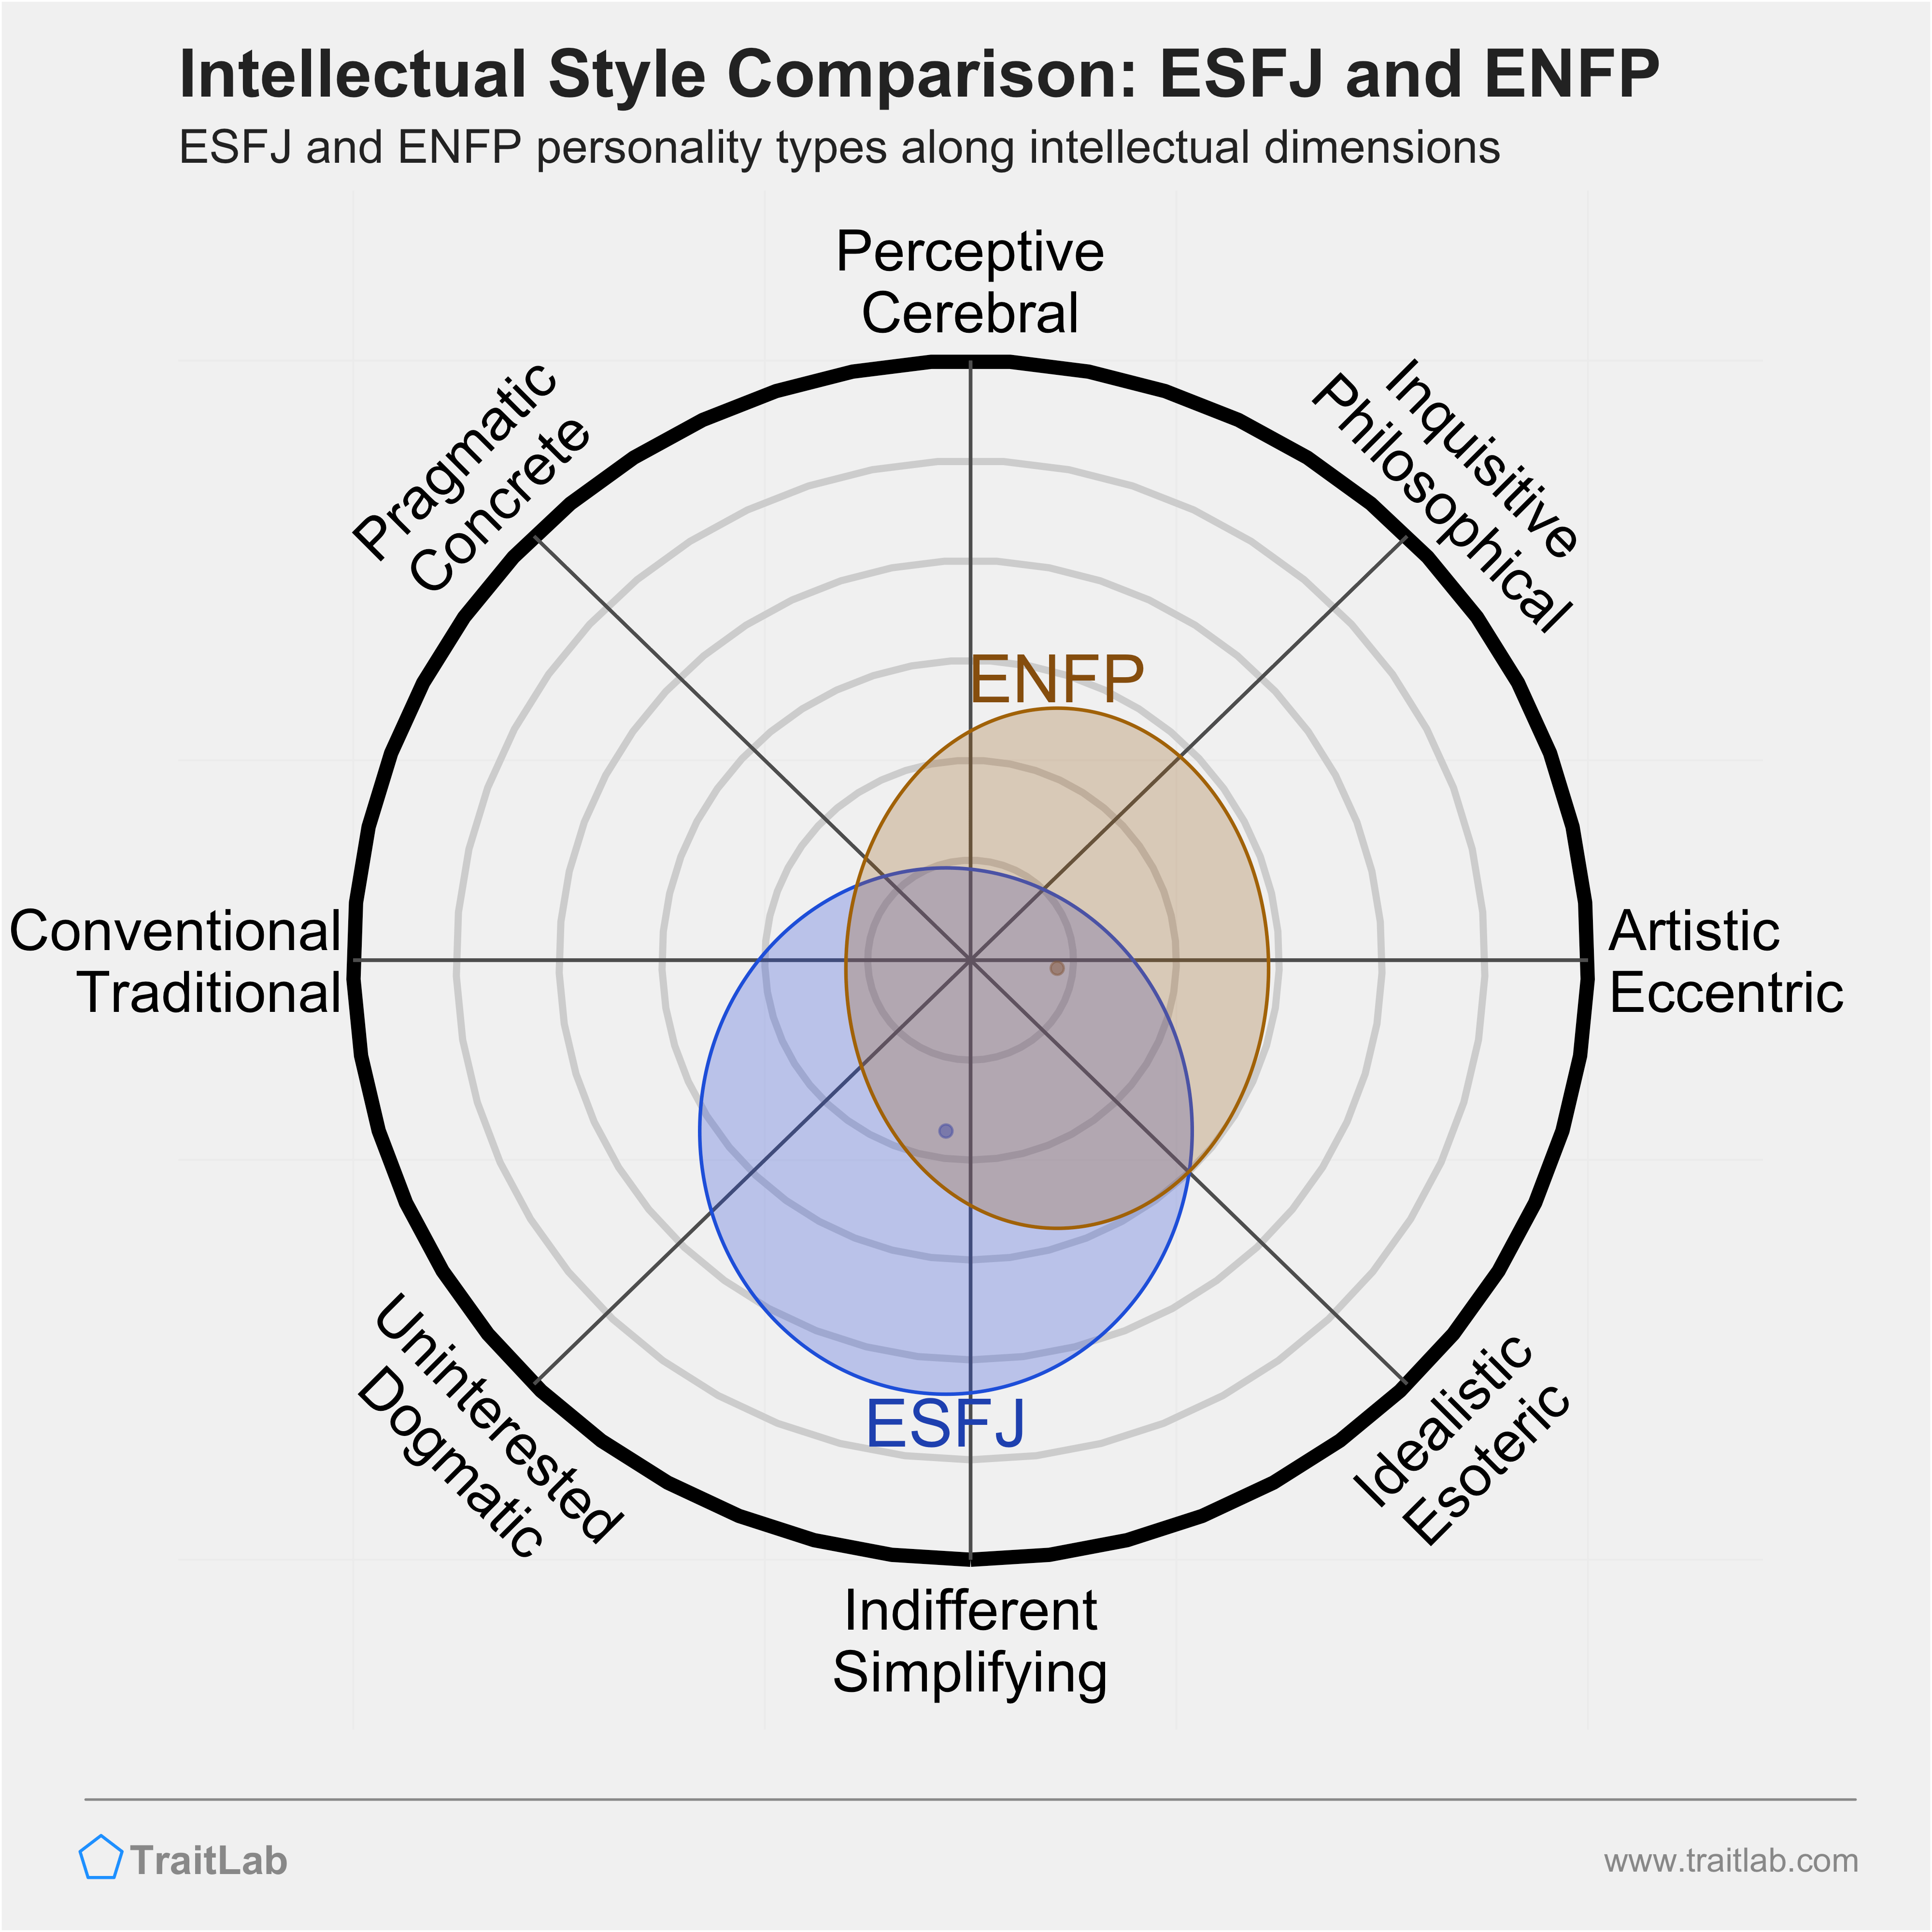 ESFJ and ENFP comparison across intellectual dimensions